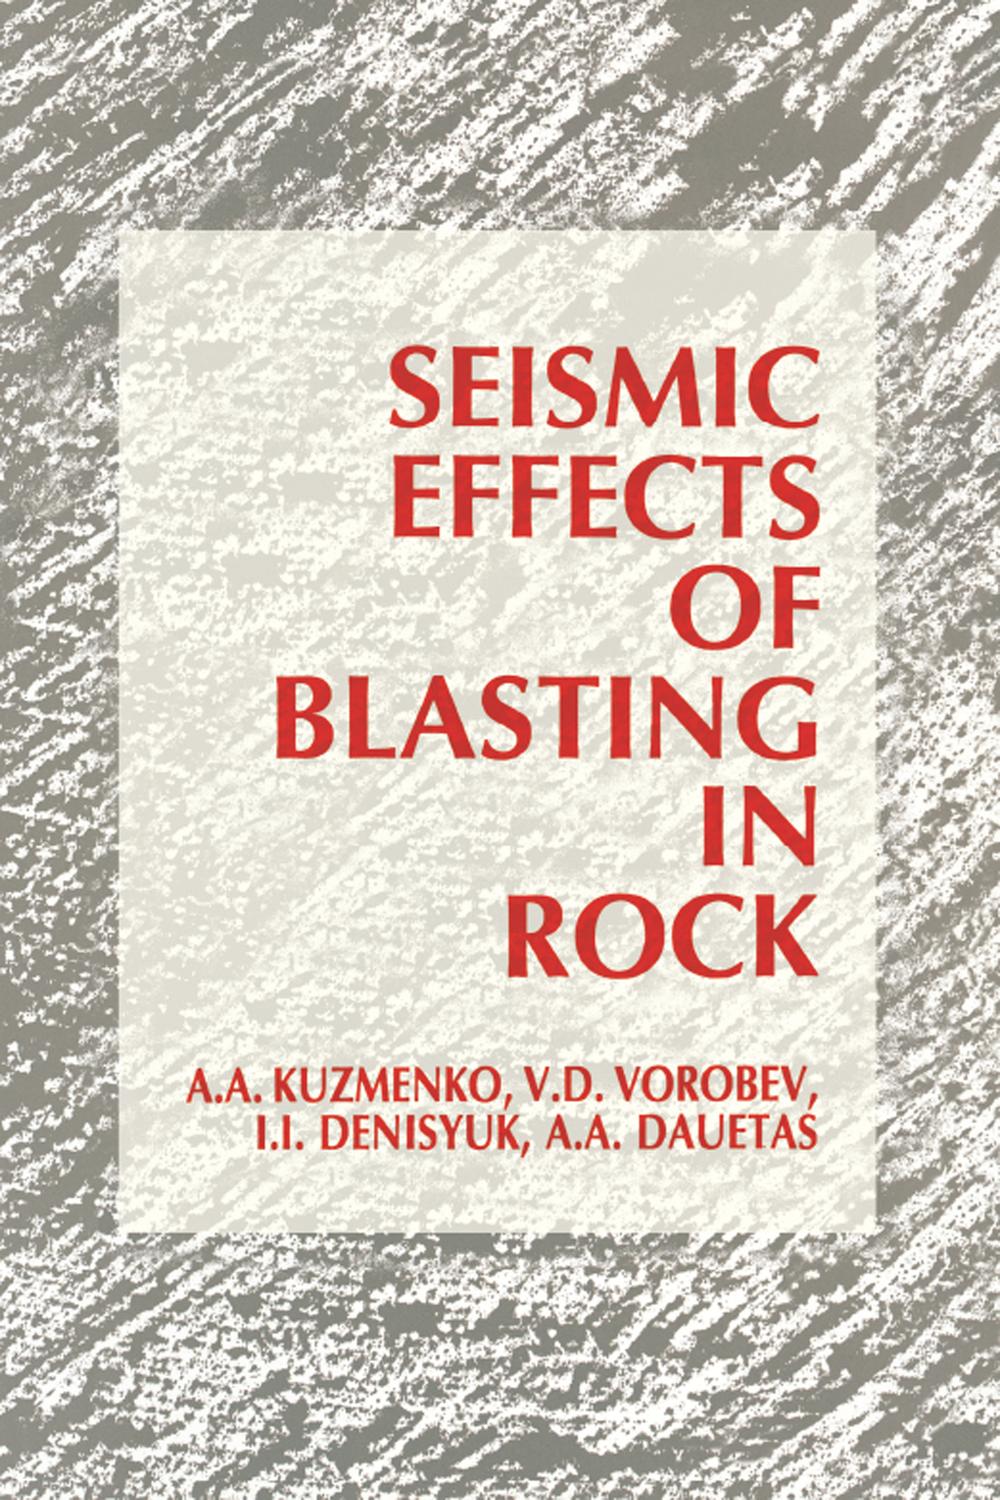 Seismic Effects of Blasting in Rock - A.A. Dauetas,,